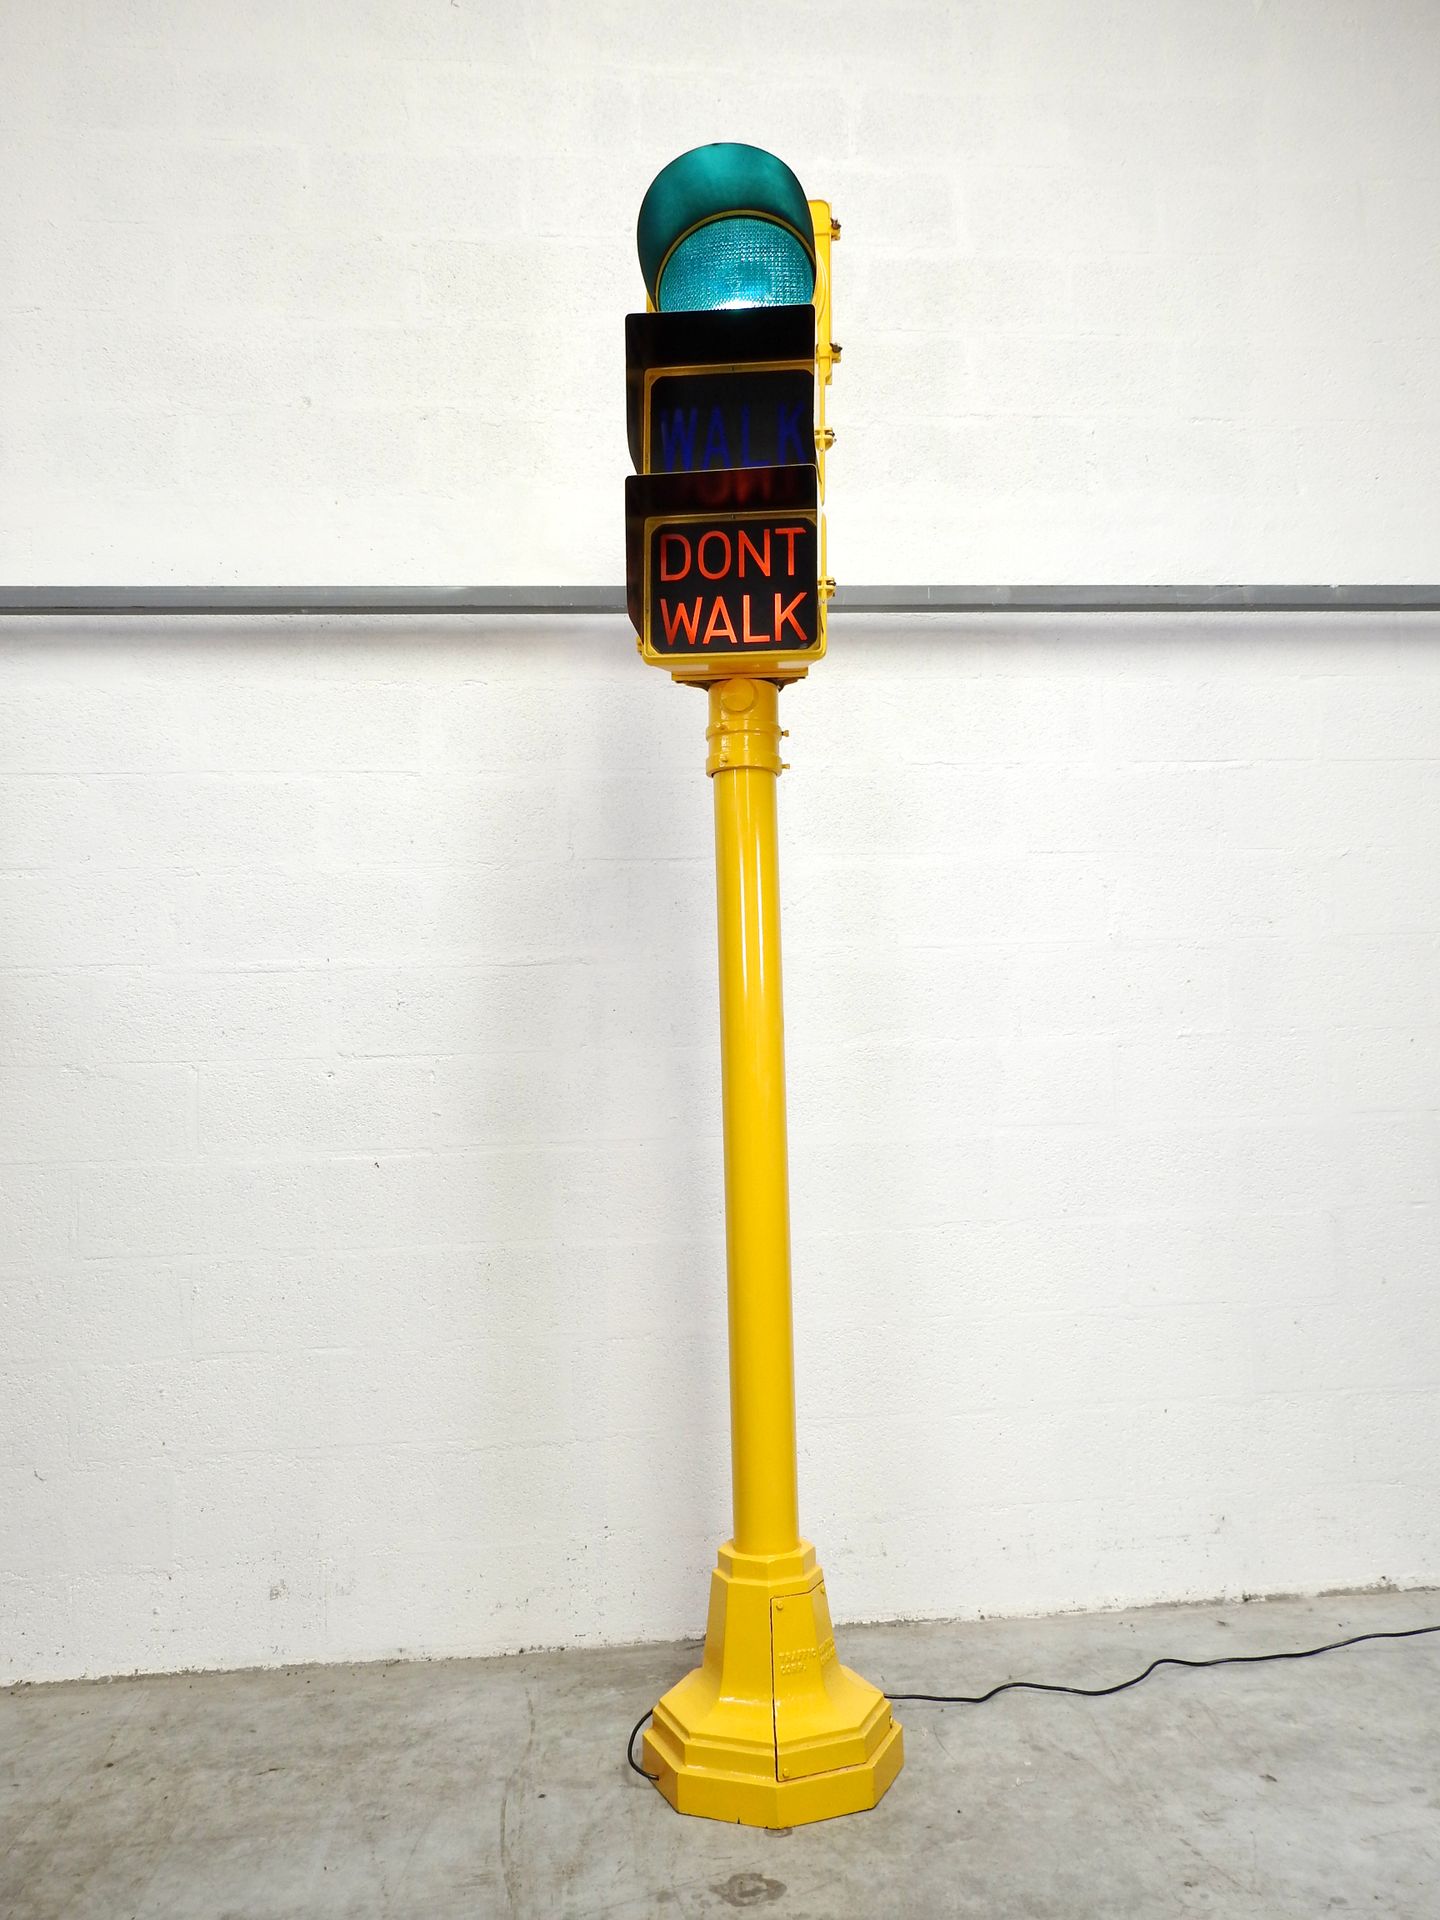 Null 走路/不走路 "的人行横道灯。

美国，芝加哥市，1960年代

金属结构，铸铁的八角形底座和脚，有一个可固定在地面上的活门，上面写着 "芝加哥市"。&hellip;